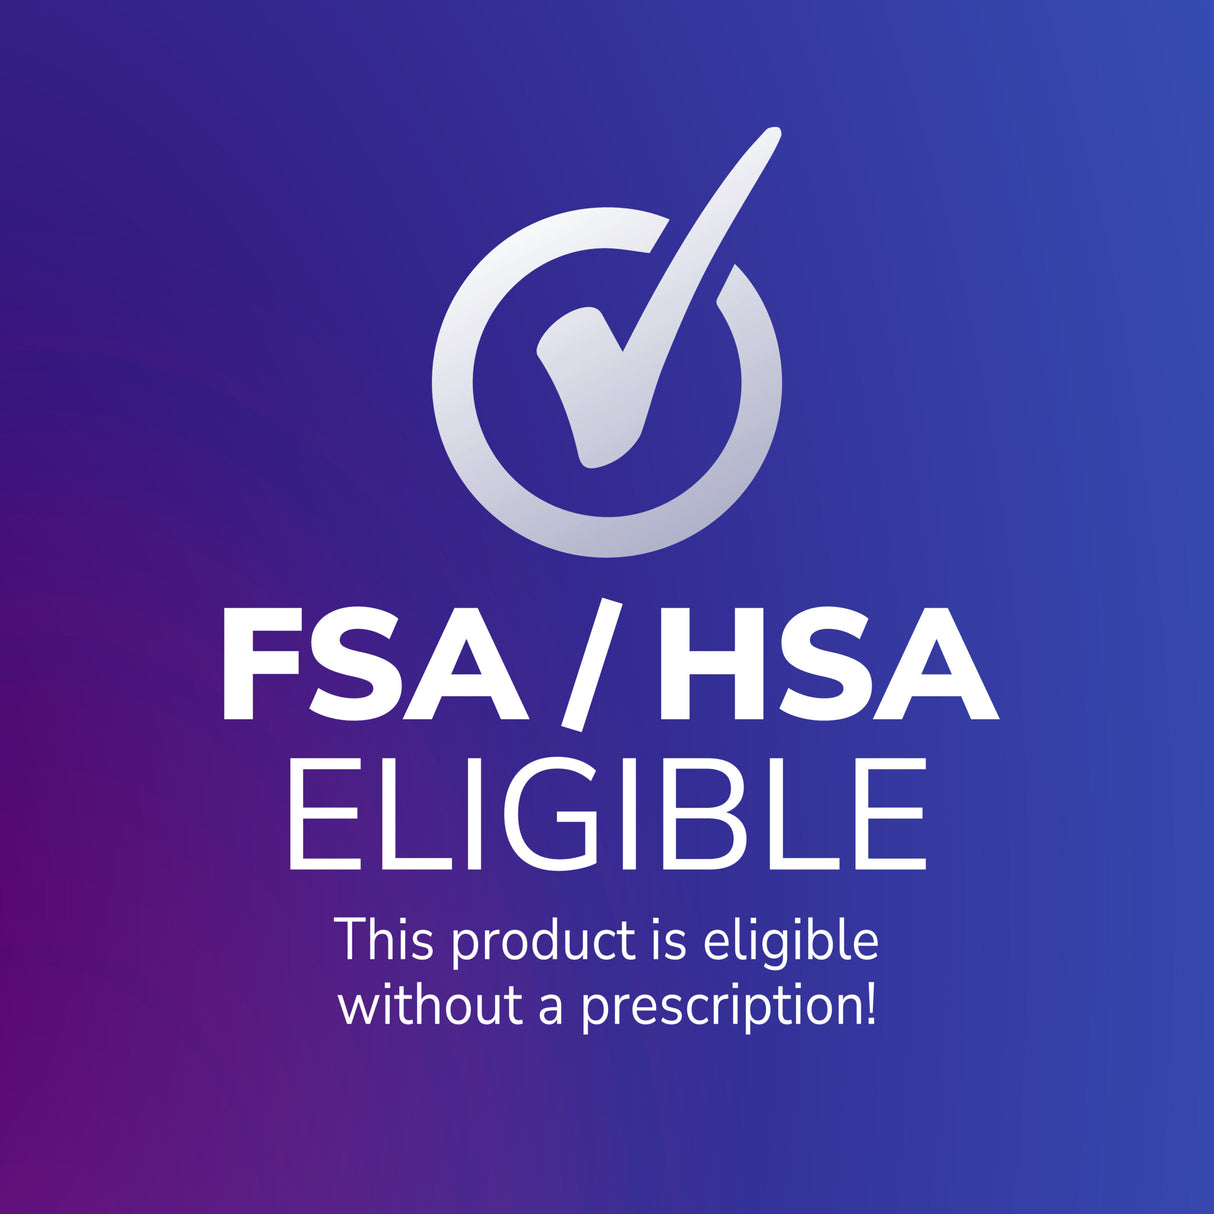 image of FSA/HSA eligible